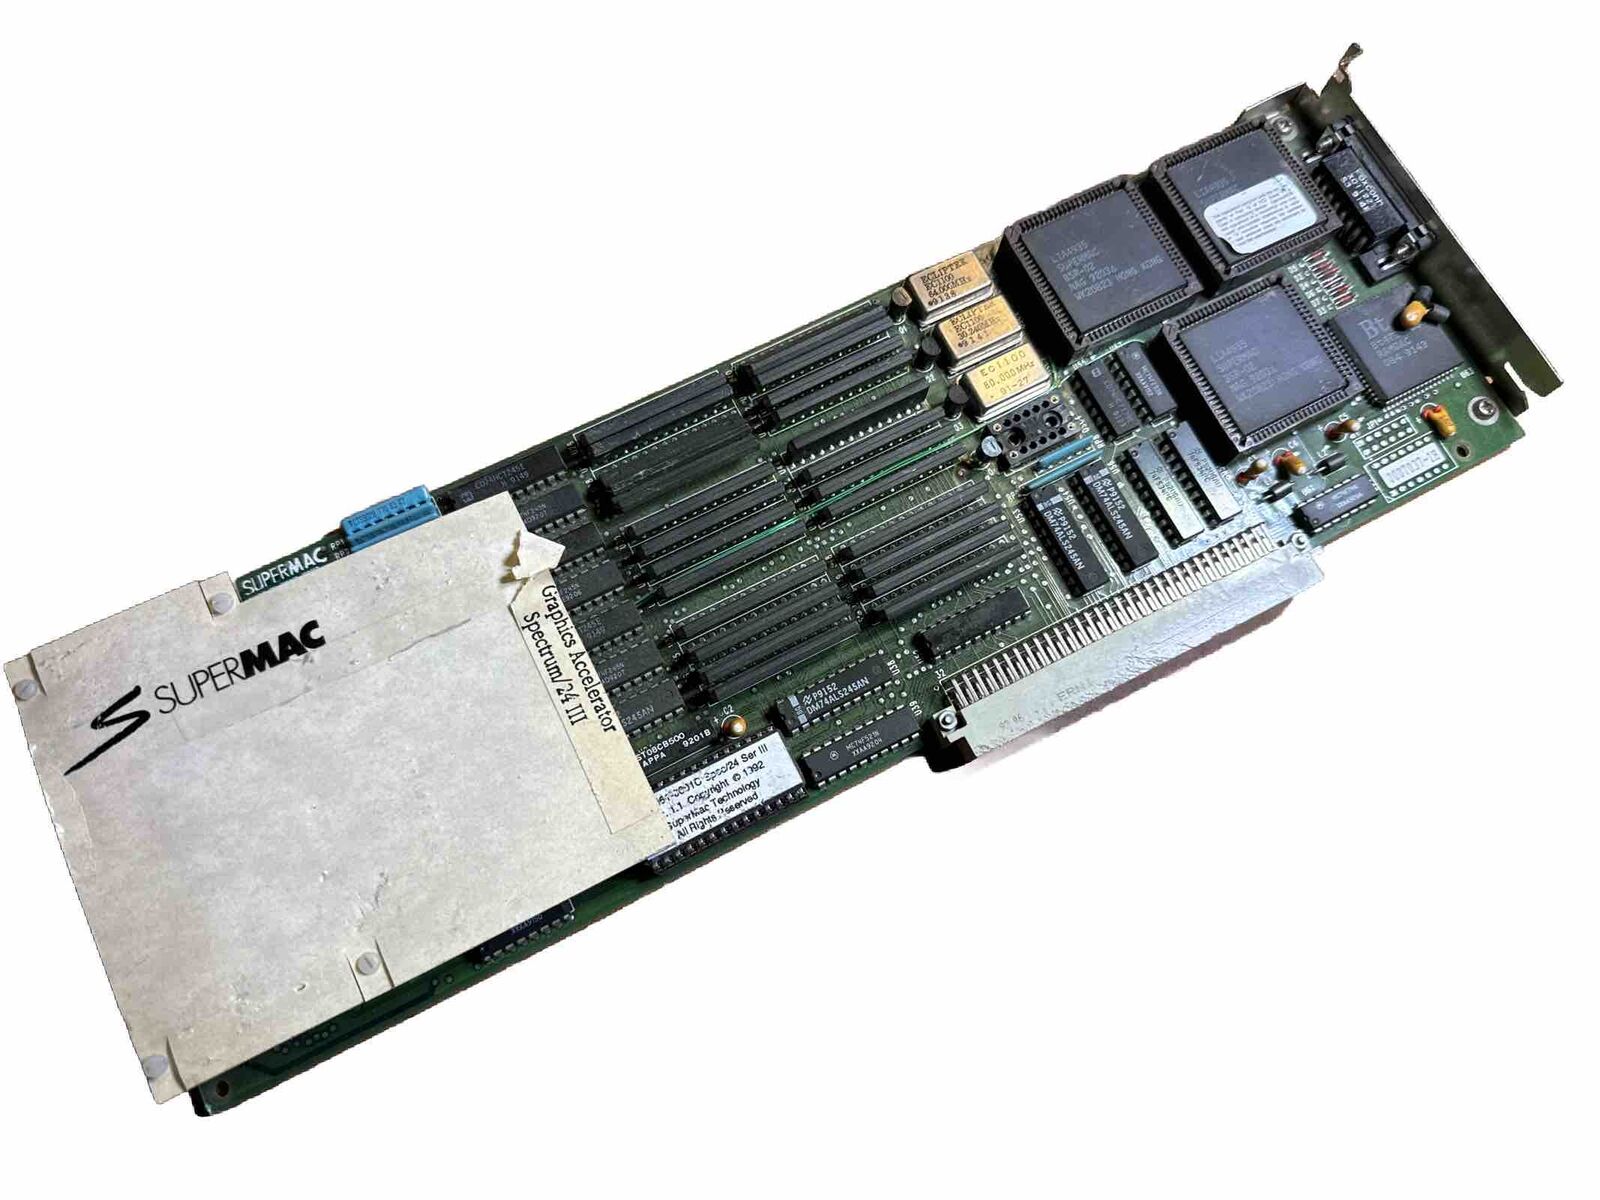 RARE SuperMac Technology Graphics Accelerator Spectrum/24 III S/N E 300332